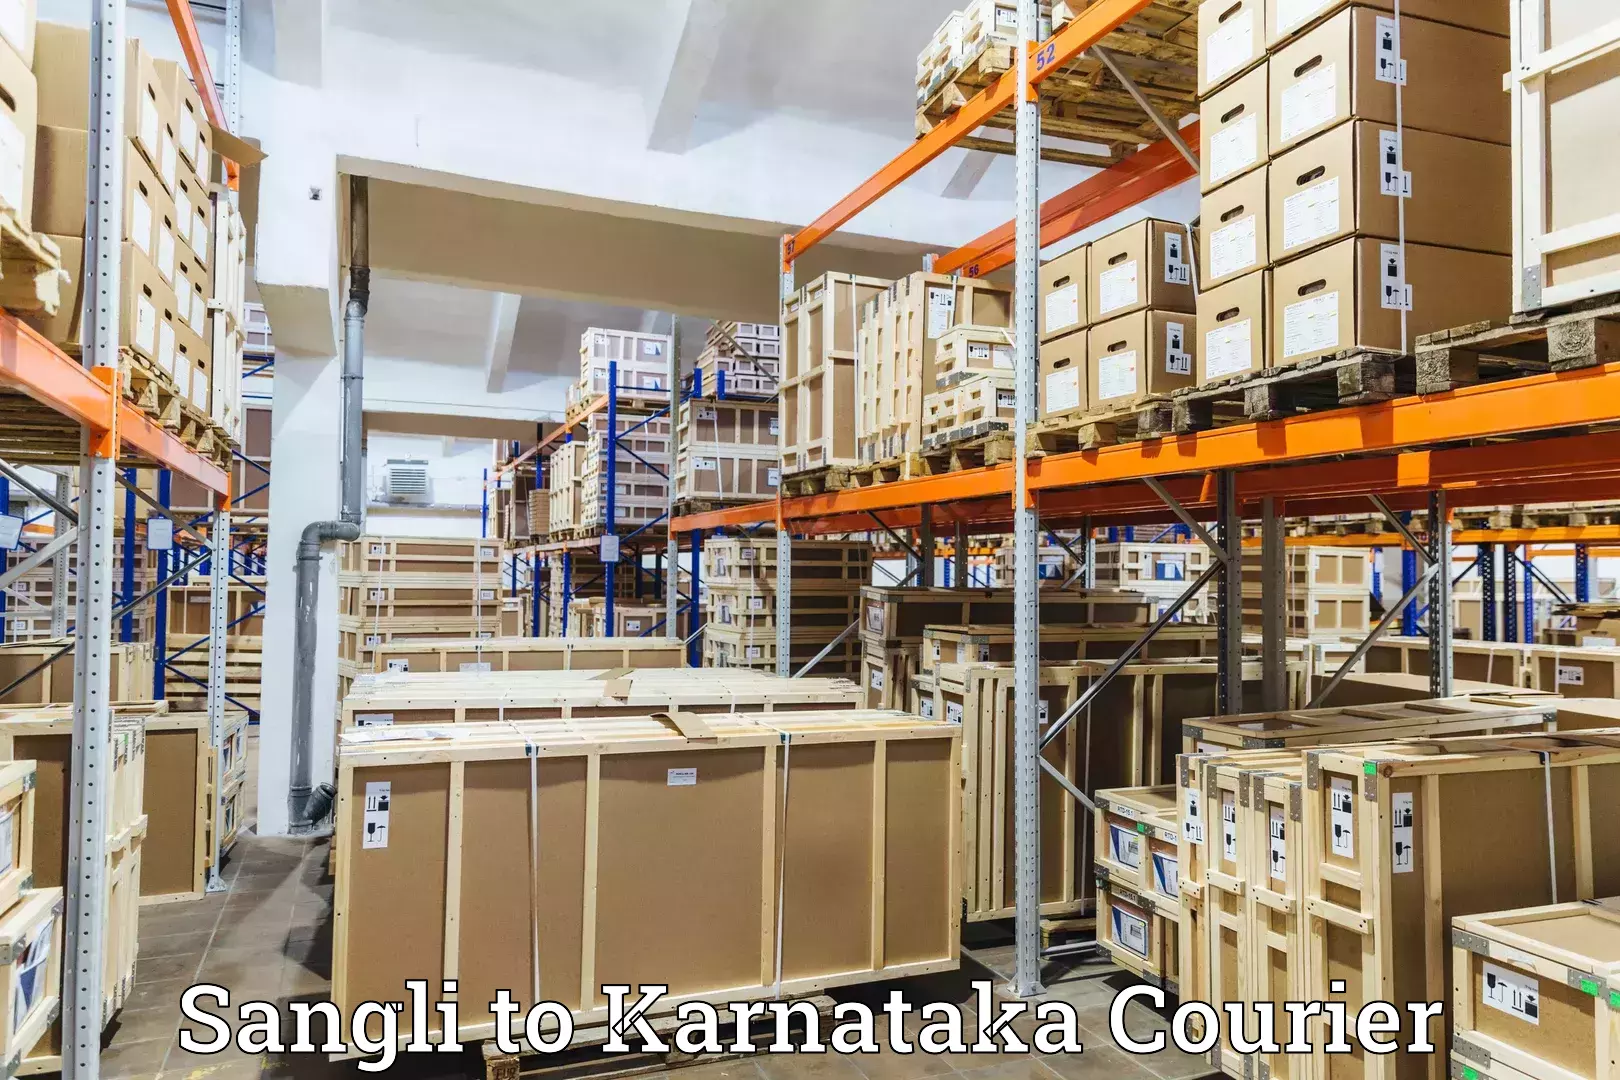 Global shipping networks Sangli to Kanjarakatte